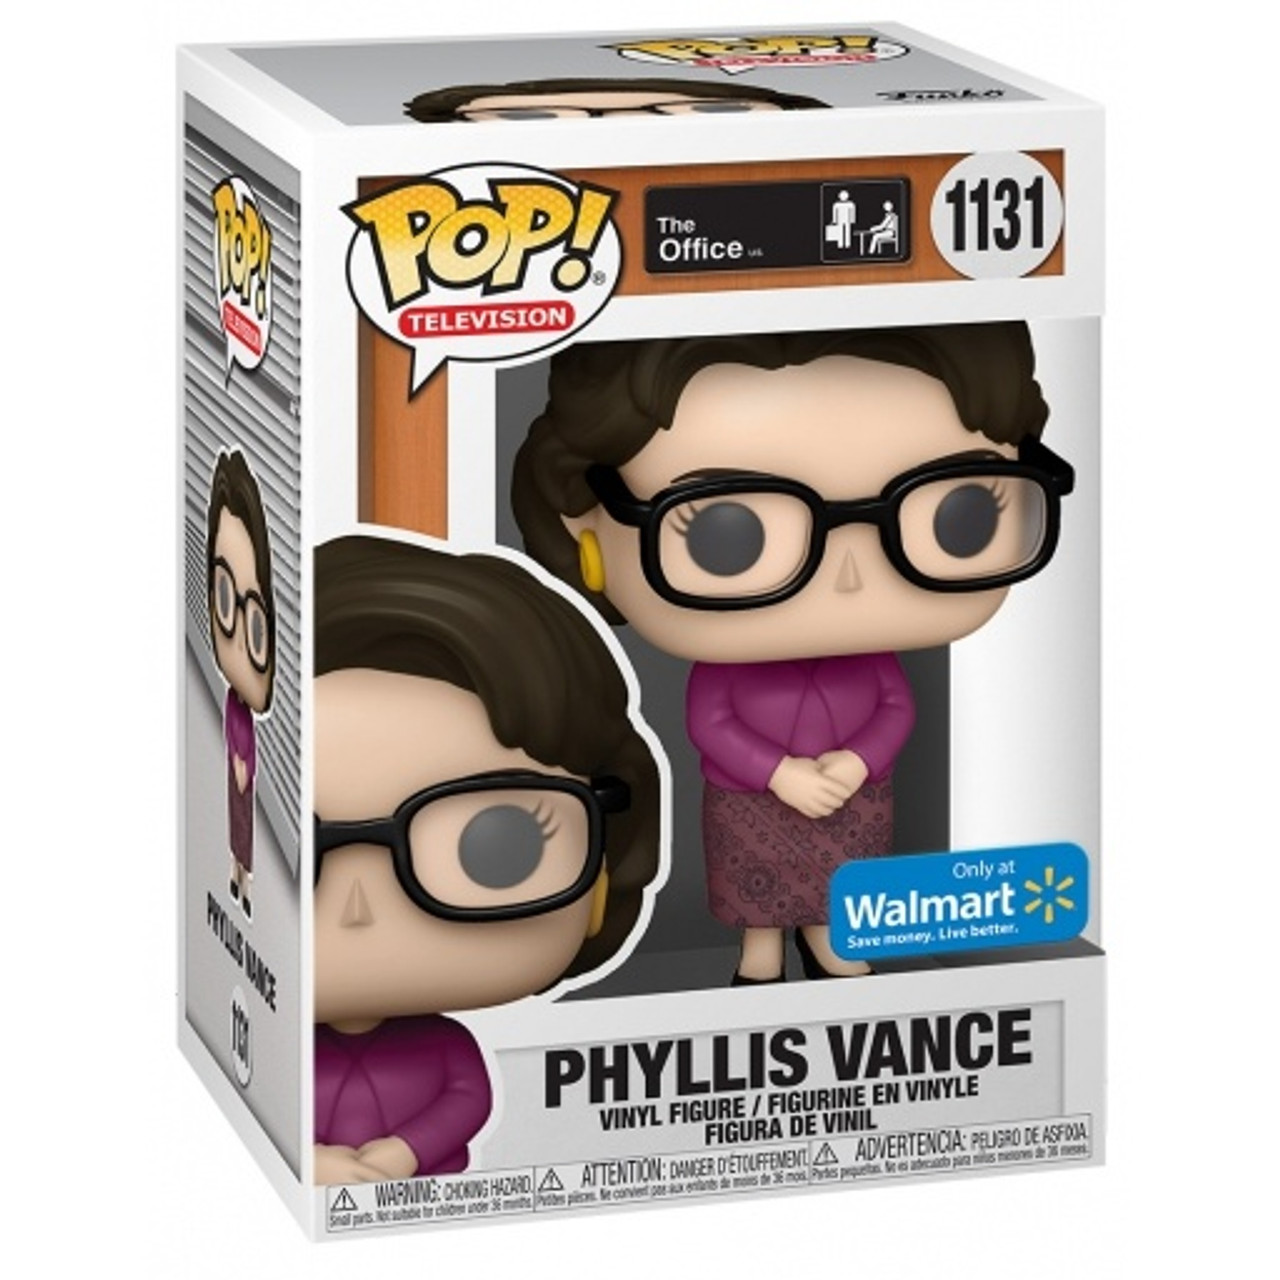 The Office POP! Vinyl Figure Phyllis Vance Only at Walmart version 9cm